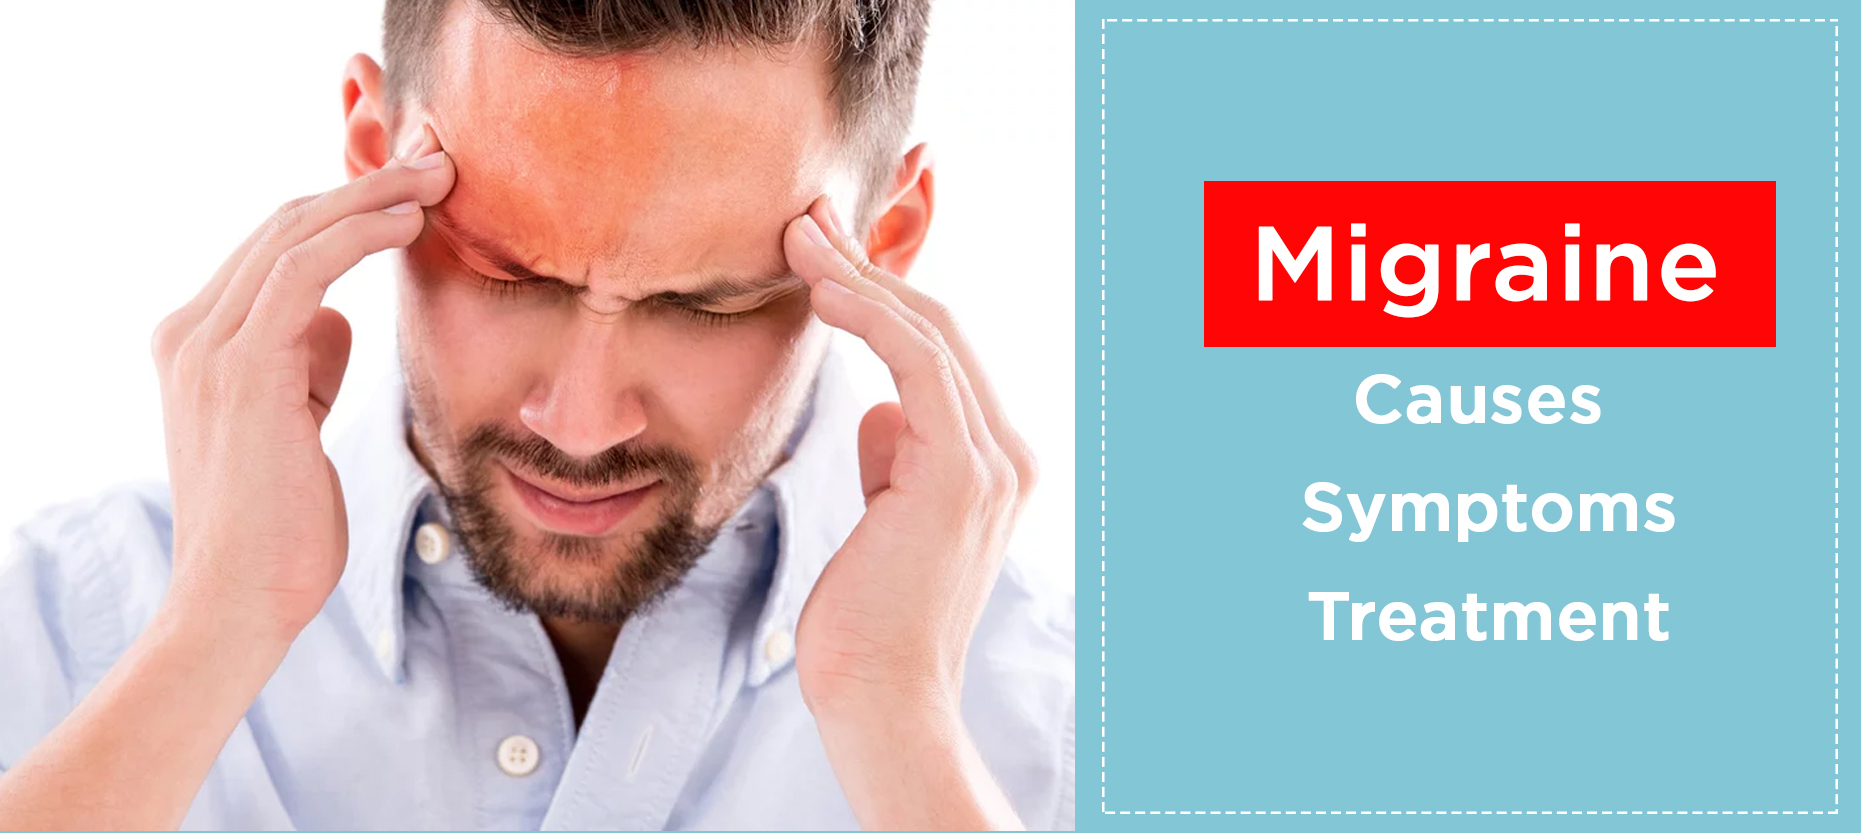  Migraine: Causes, symptoms, and Treatment-medplusmart